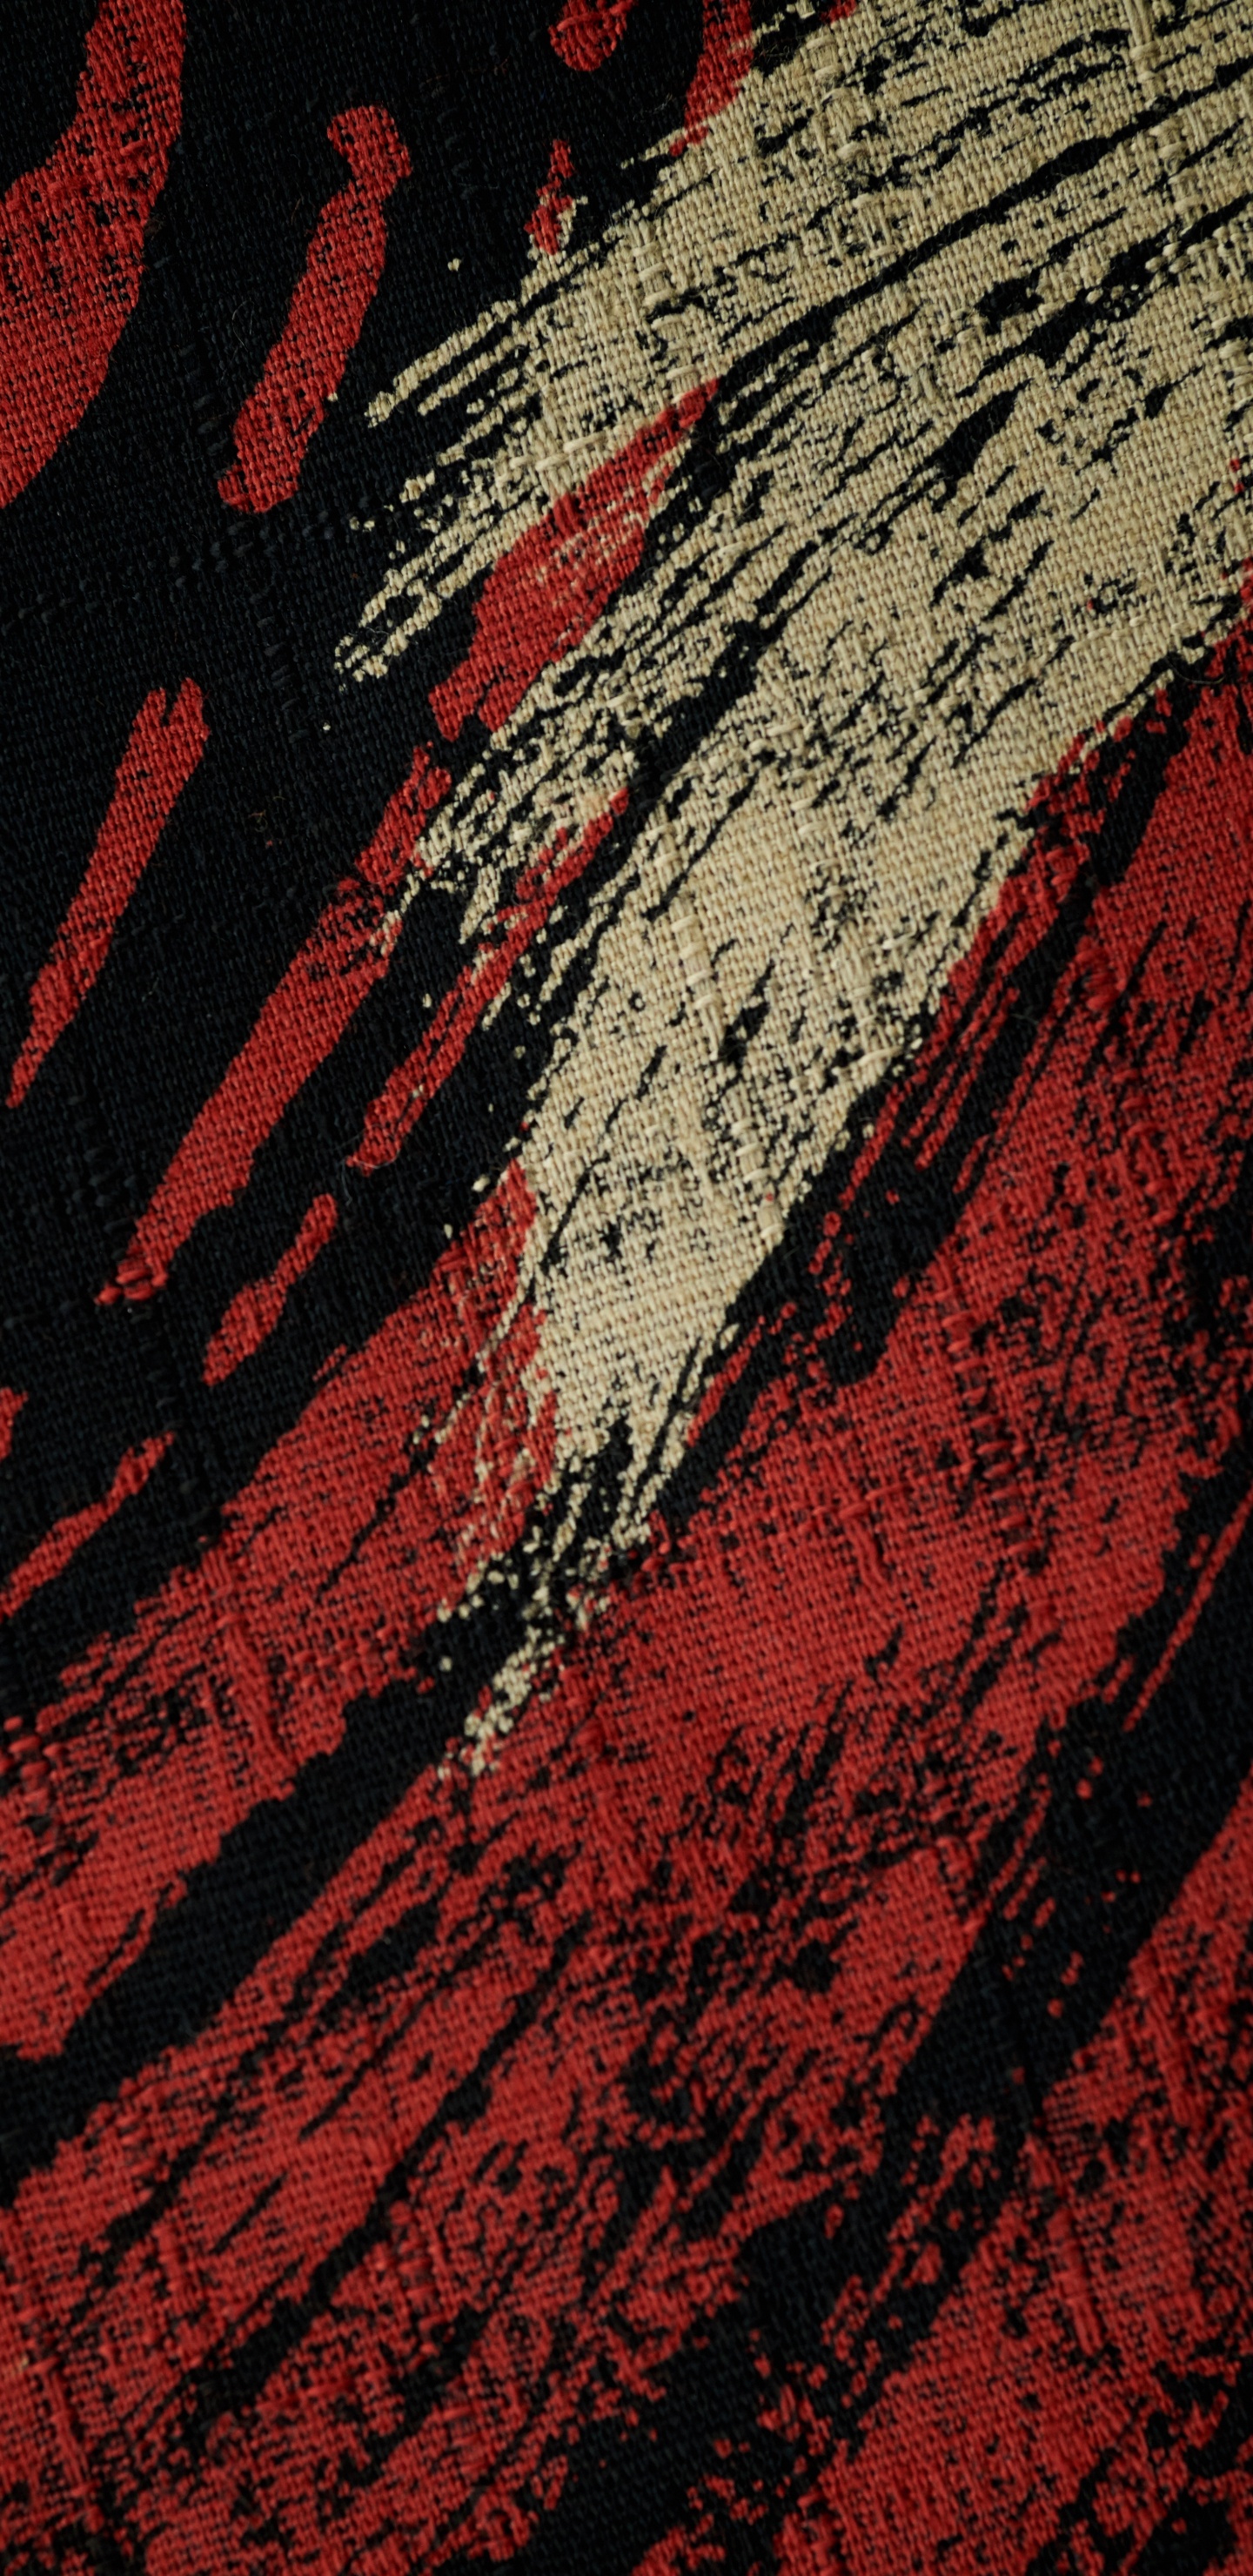 Textil Rojo Blanco y Negro. Wallpaper in 1440x2960 Resolution